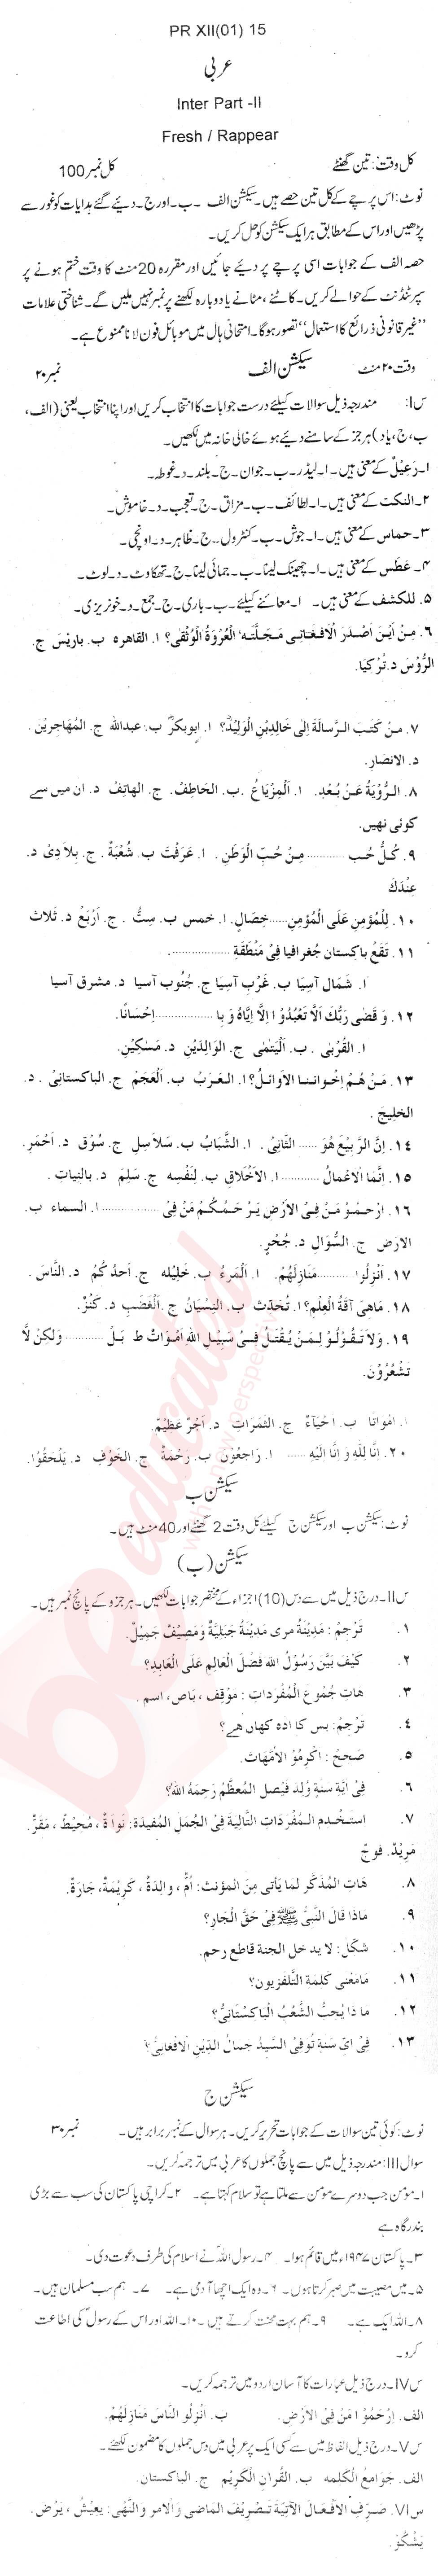 Arabic FA Part 2 Past Paper Group 1 BISE Mardan 2015